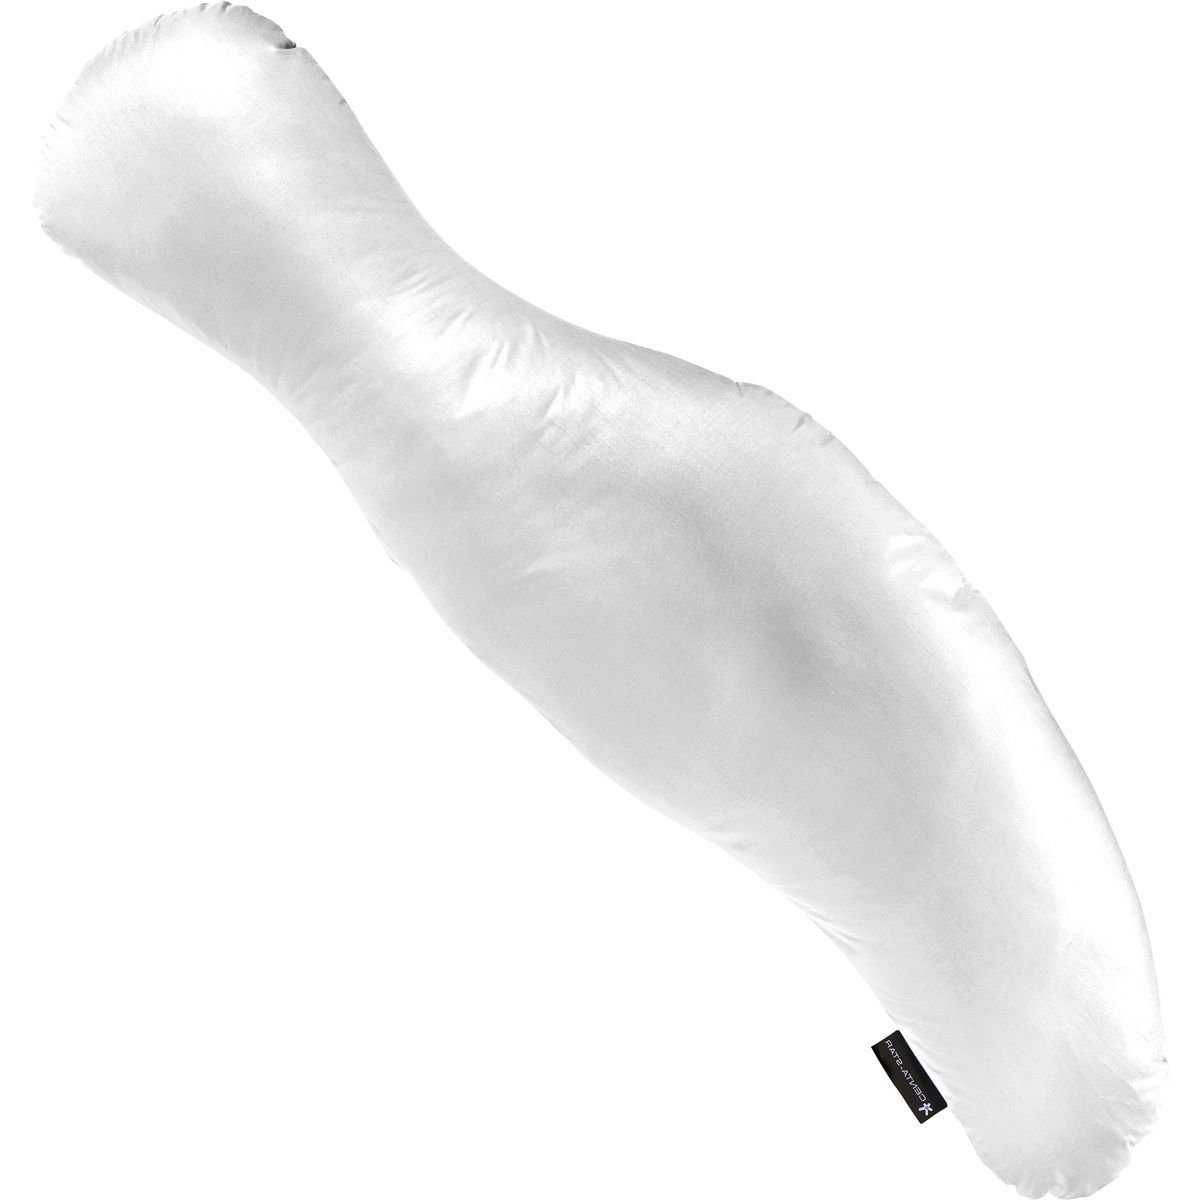 Centa-star Side Sleeper Pillow Textile Fibre White Size Approx. 130 cm